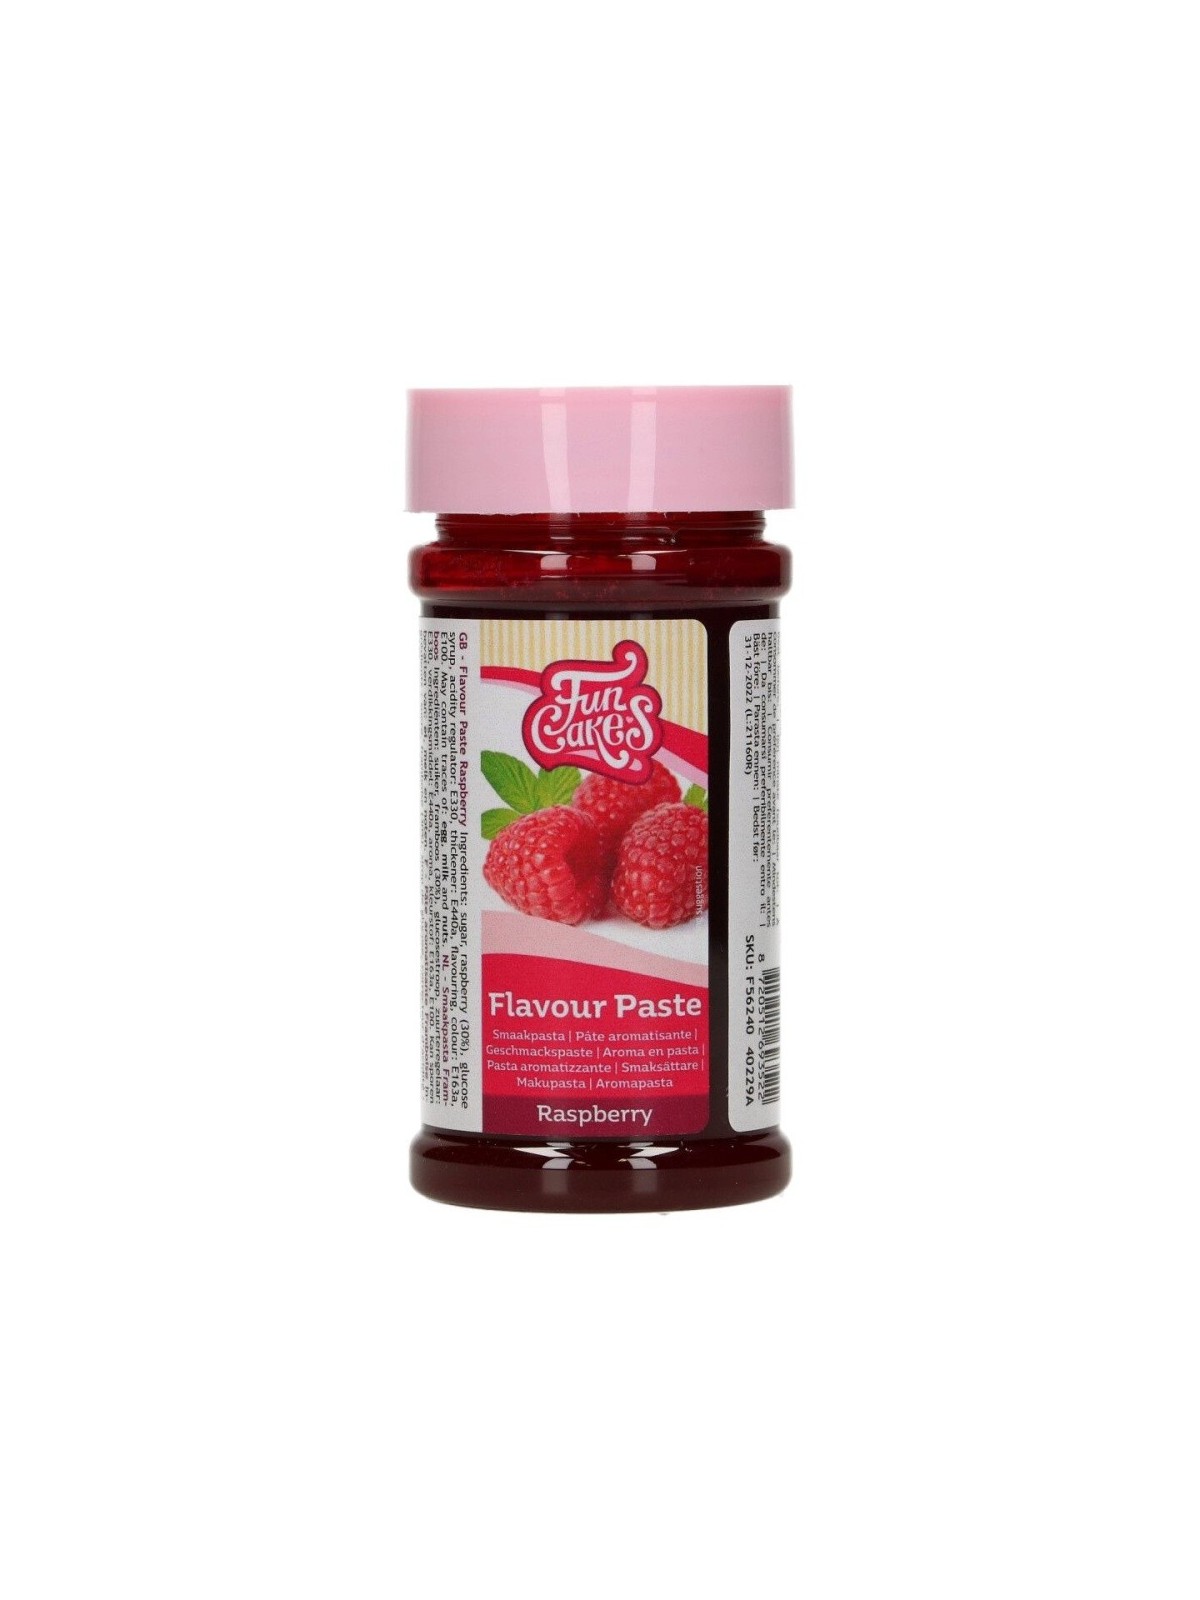 FunCakes Flavouring  - Raspberry - 120g